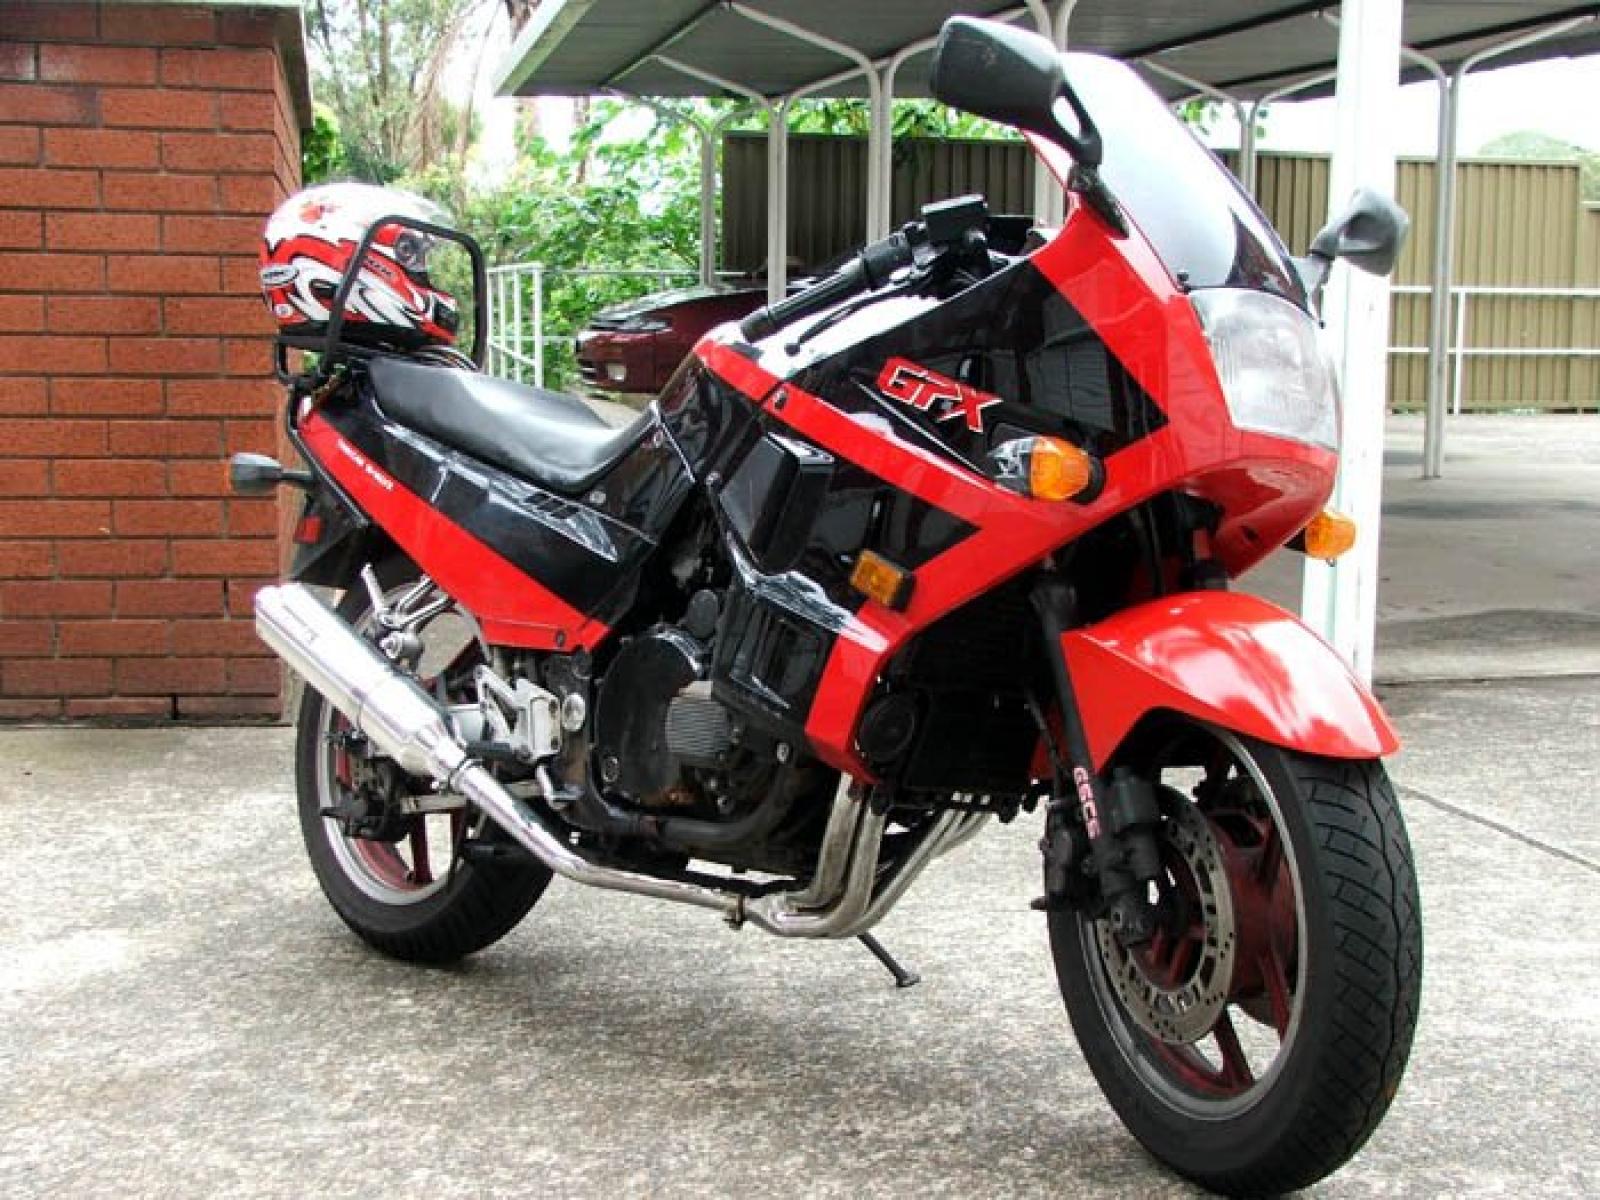 Мотоцикл gpz 600 r 1990: технические характеристики, фото, видео